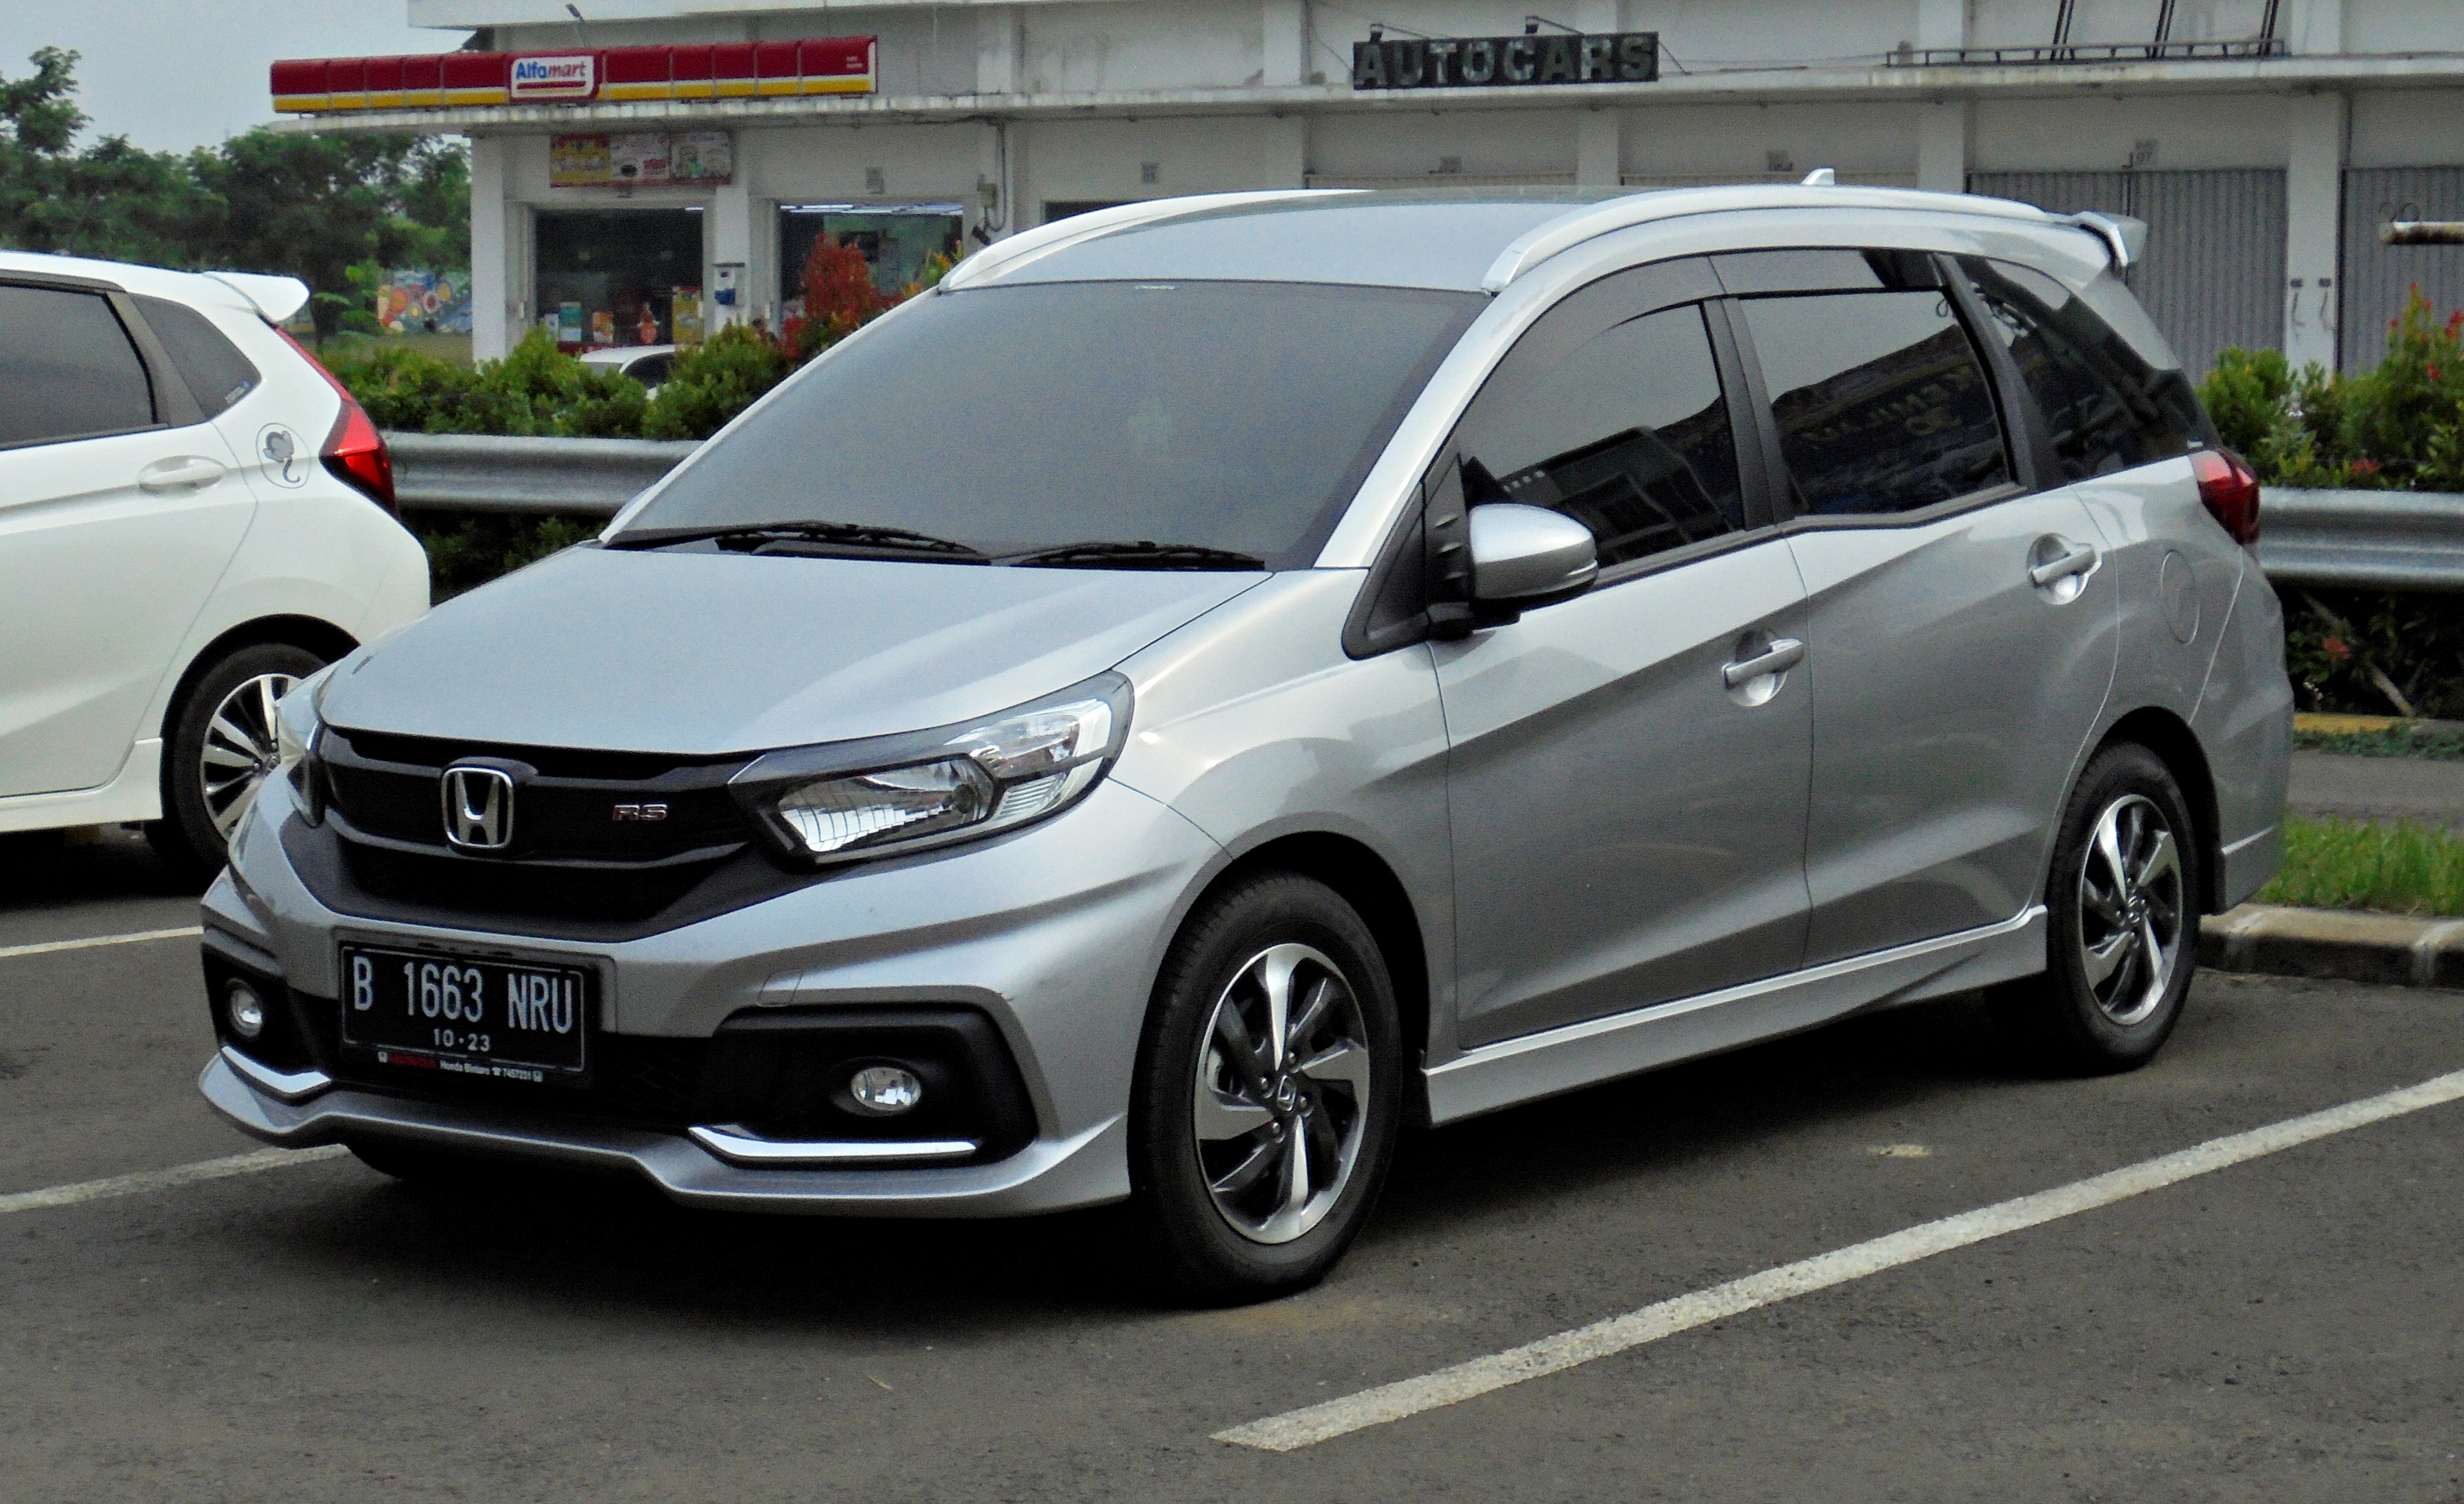 Suzuki Ertiga hd specifications